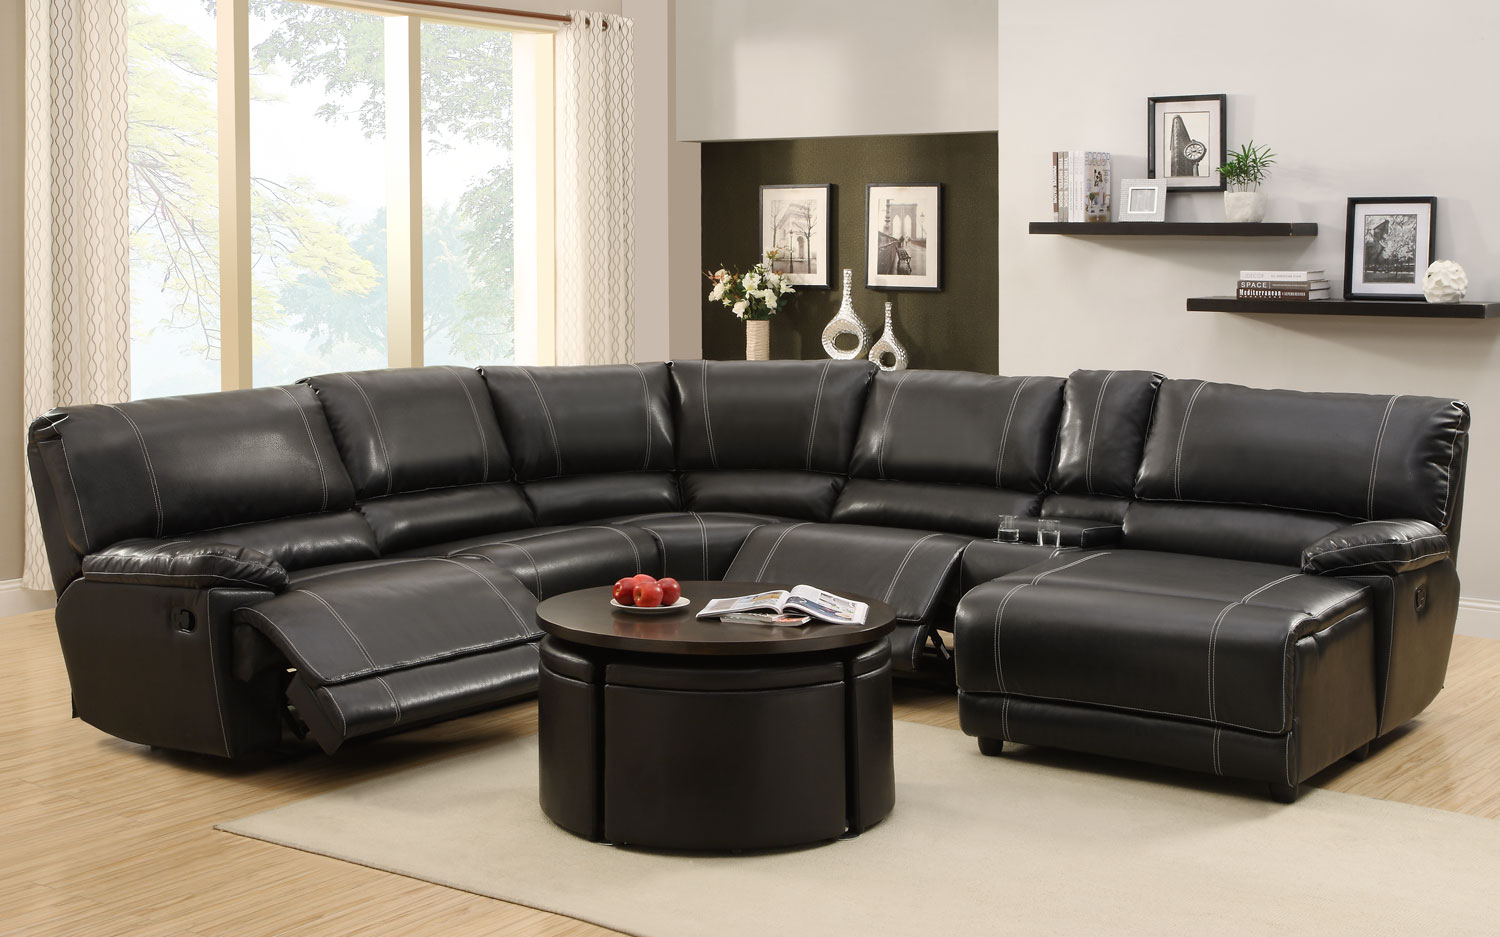 Homelegance Cale Sectional Sofa Set - Black - Bonded Leather Match